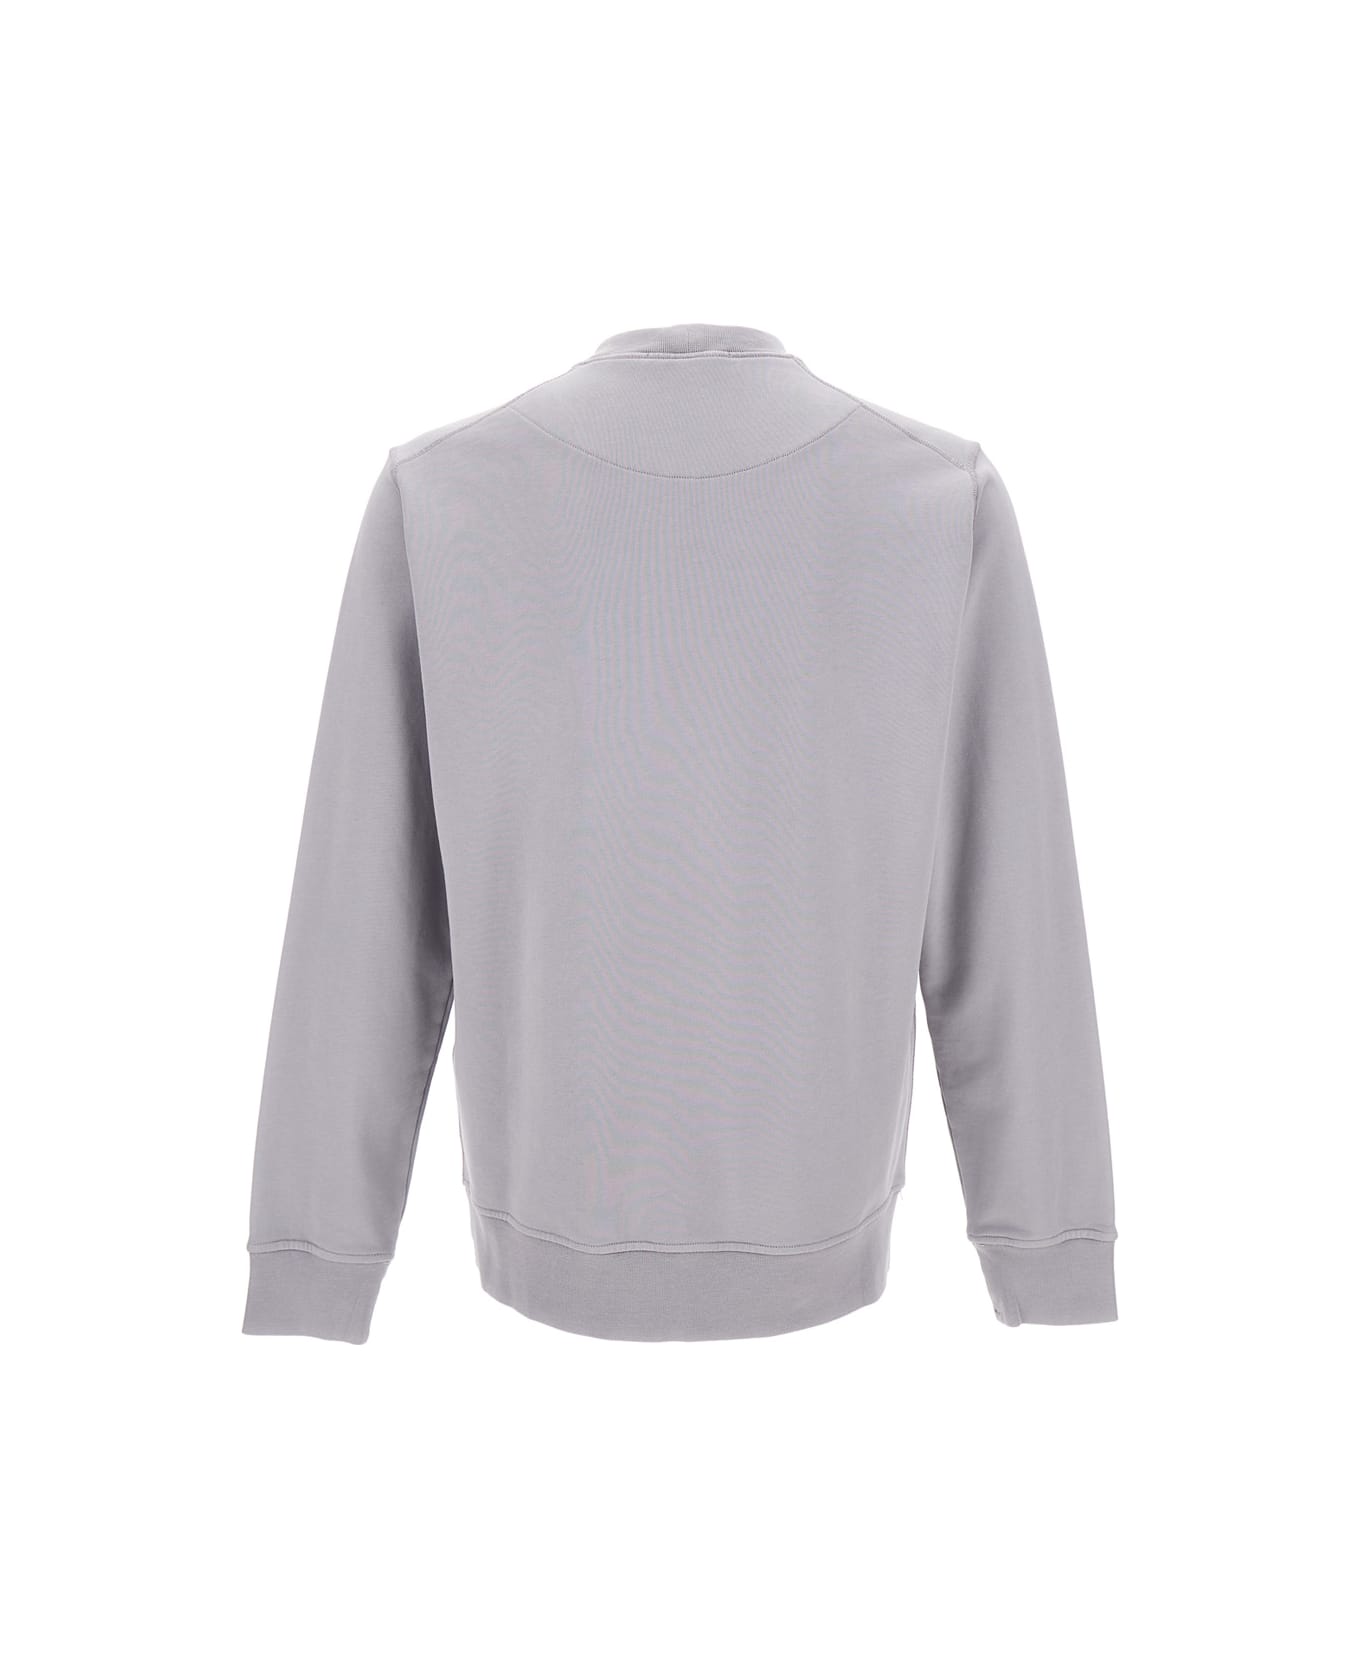 Stone Island Grey Crewneck Sweatshirt With Logo Print In Cotton Man - Grey